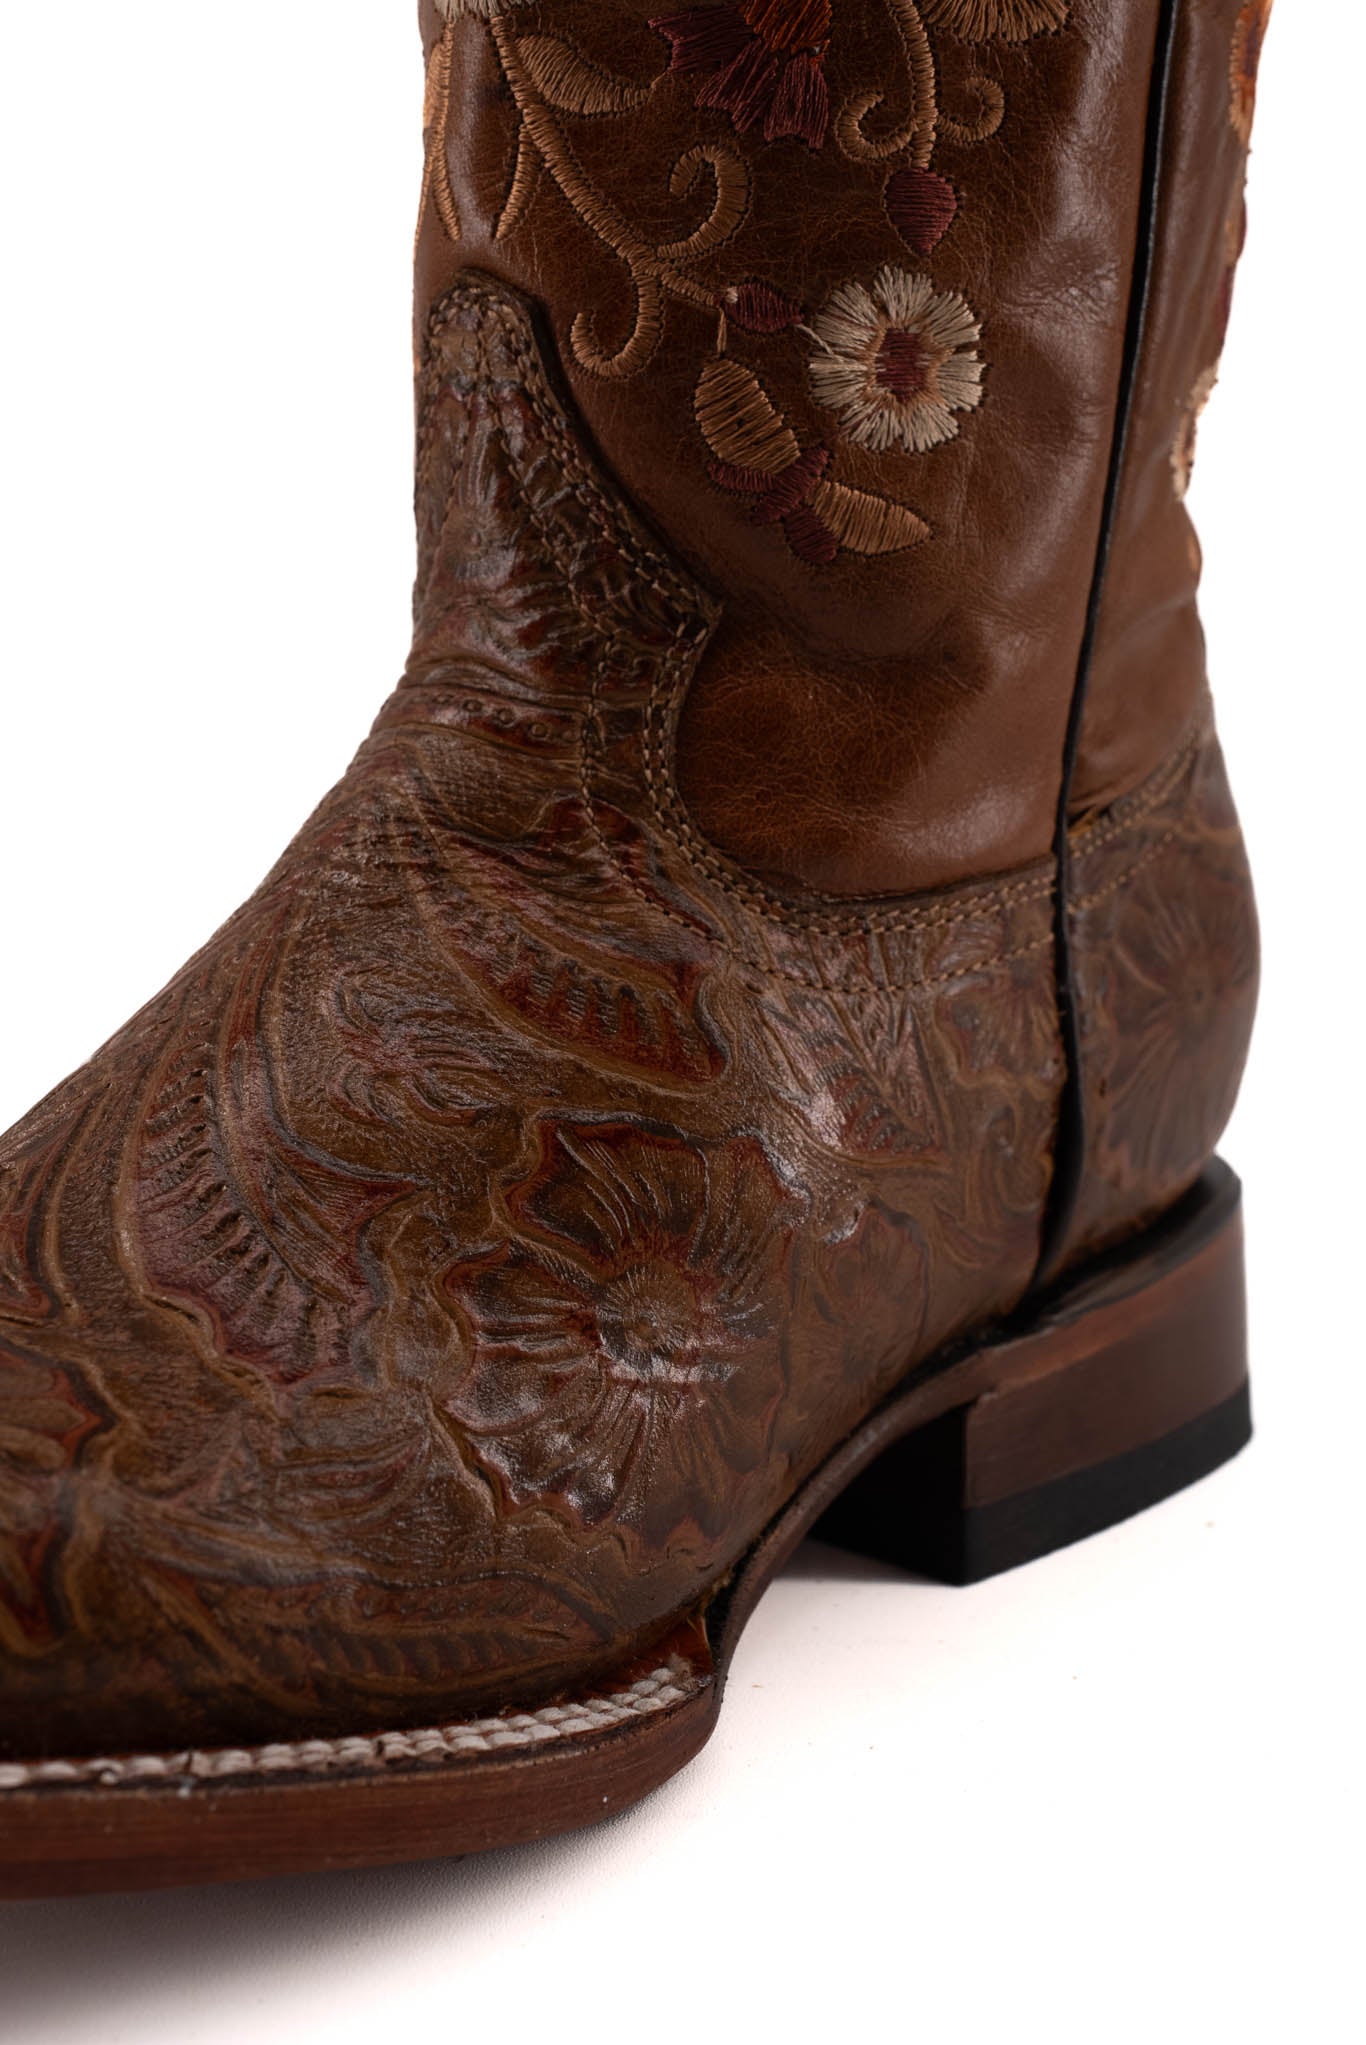 100% Leather bulldog style cowboy boots —